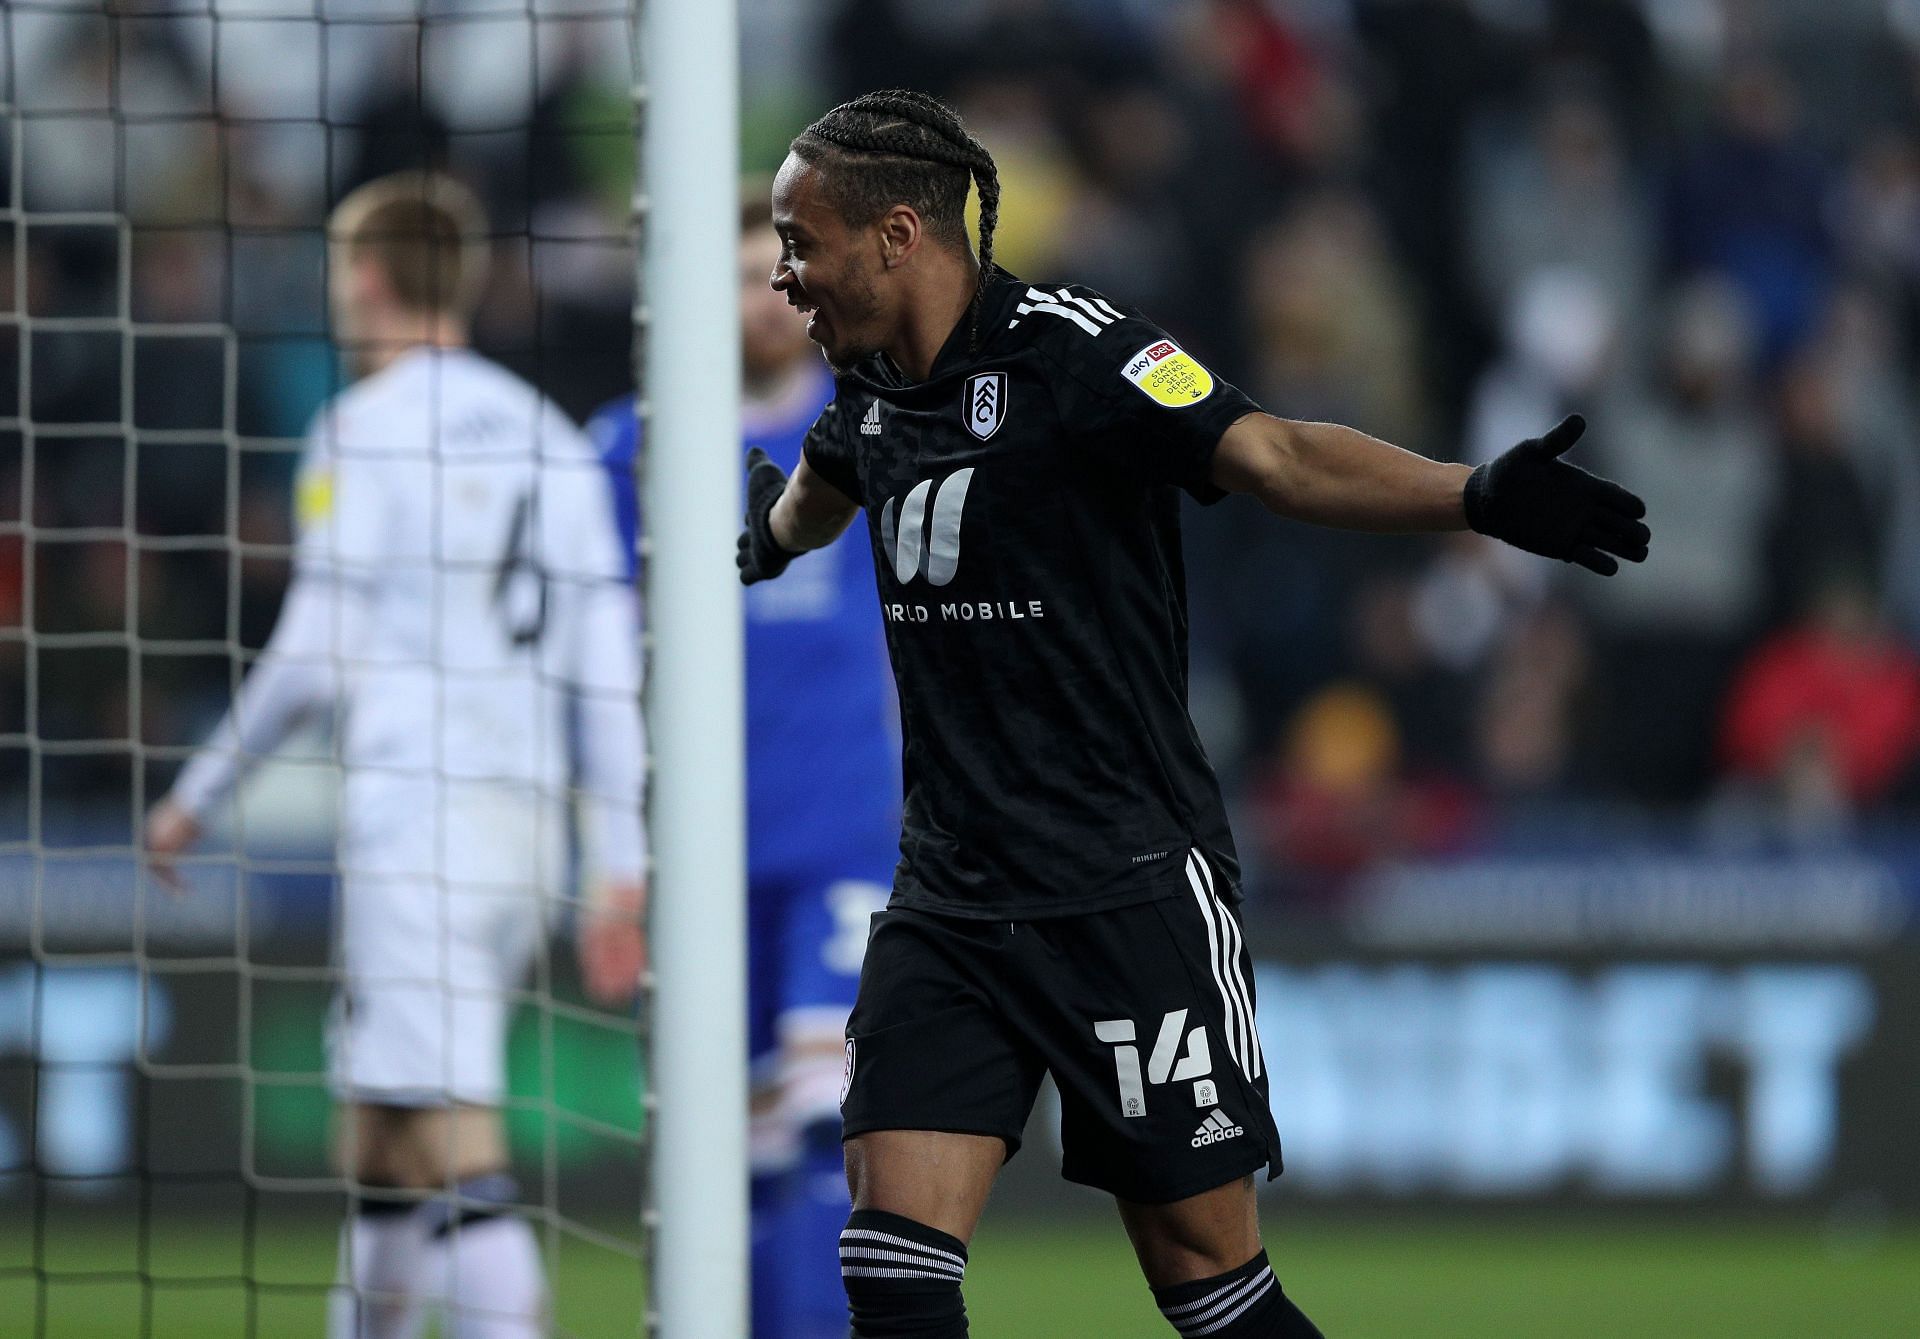 Decordova-Reid has scored Fulham&#039;s second-most goals this season